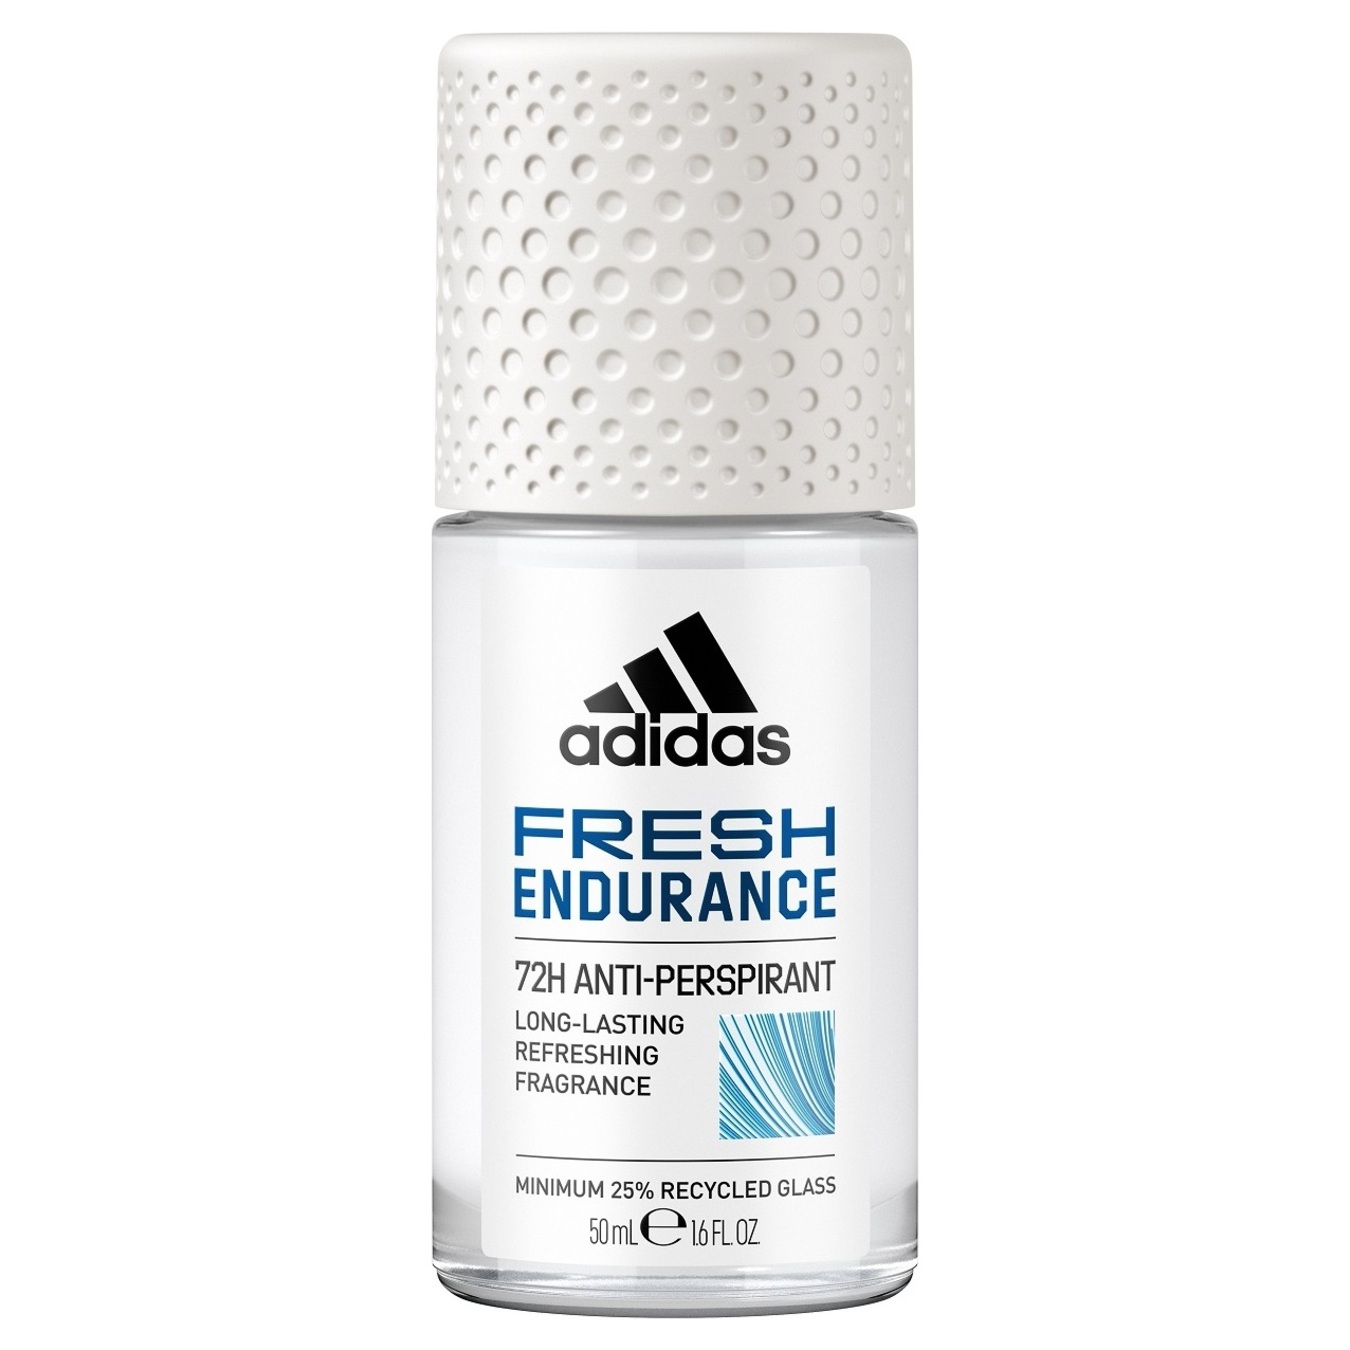 Adidas fresh endurance ball deodorant for women 50 ml